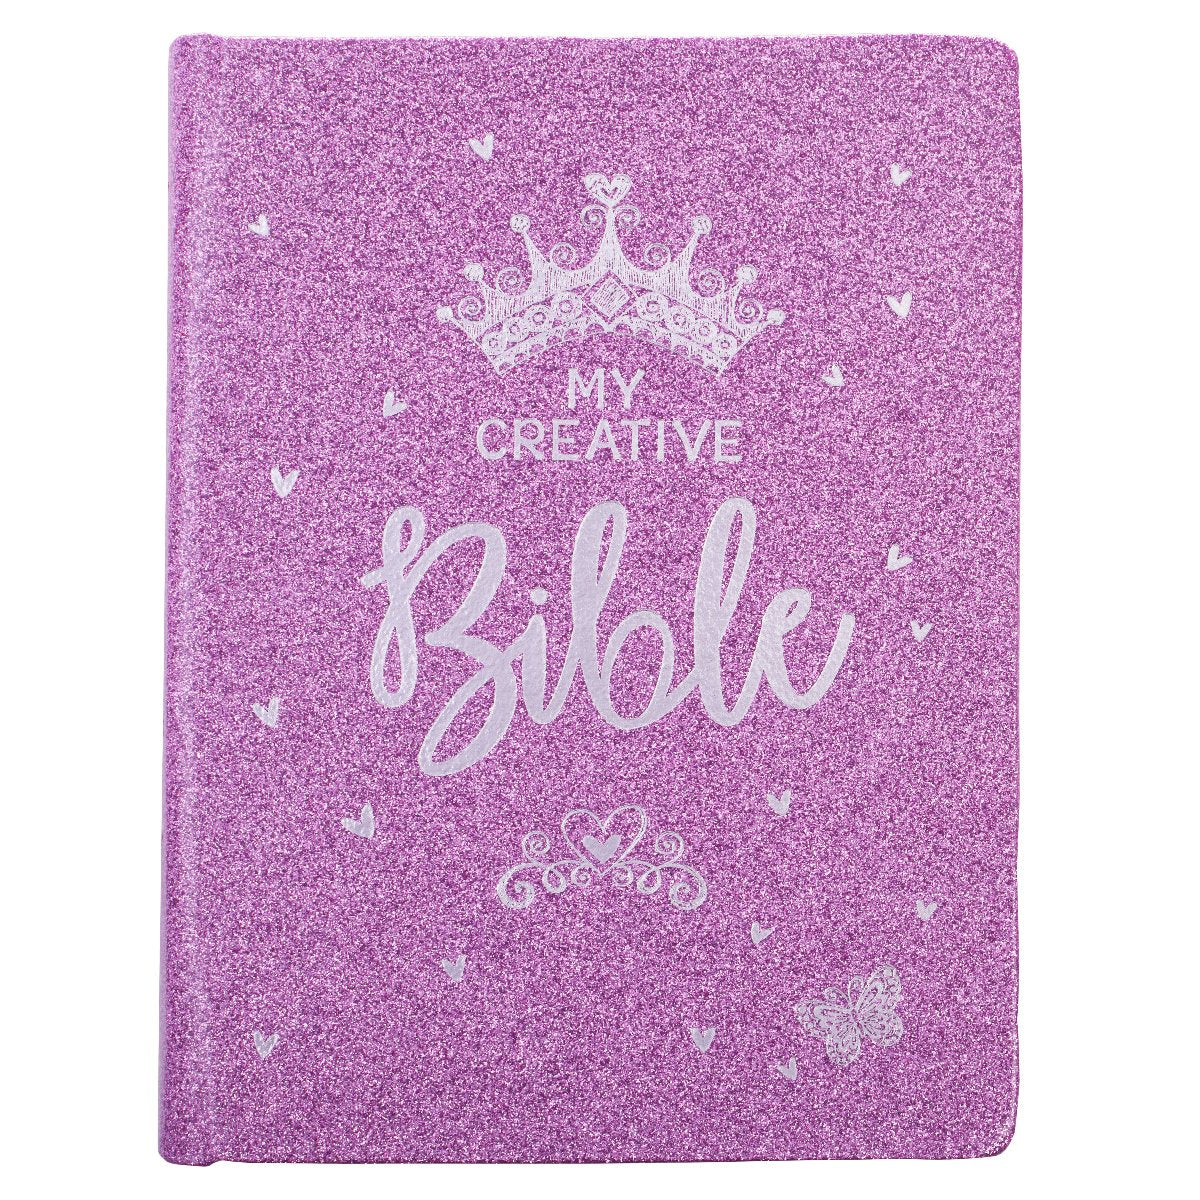 My Creative Bible Purple Glitter Hardcover by